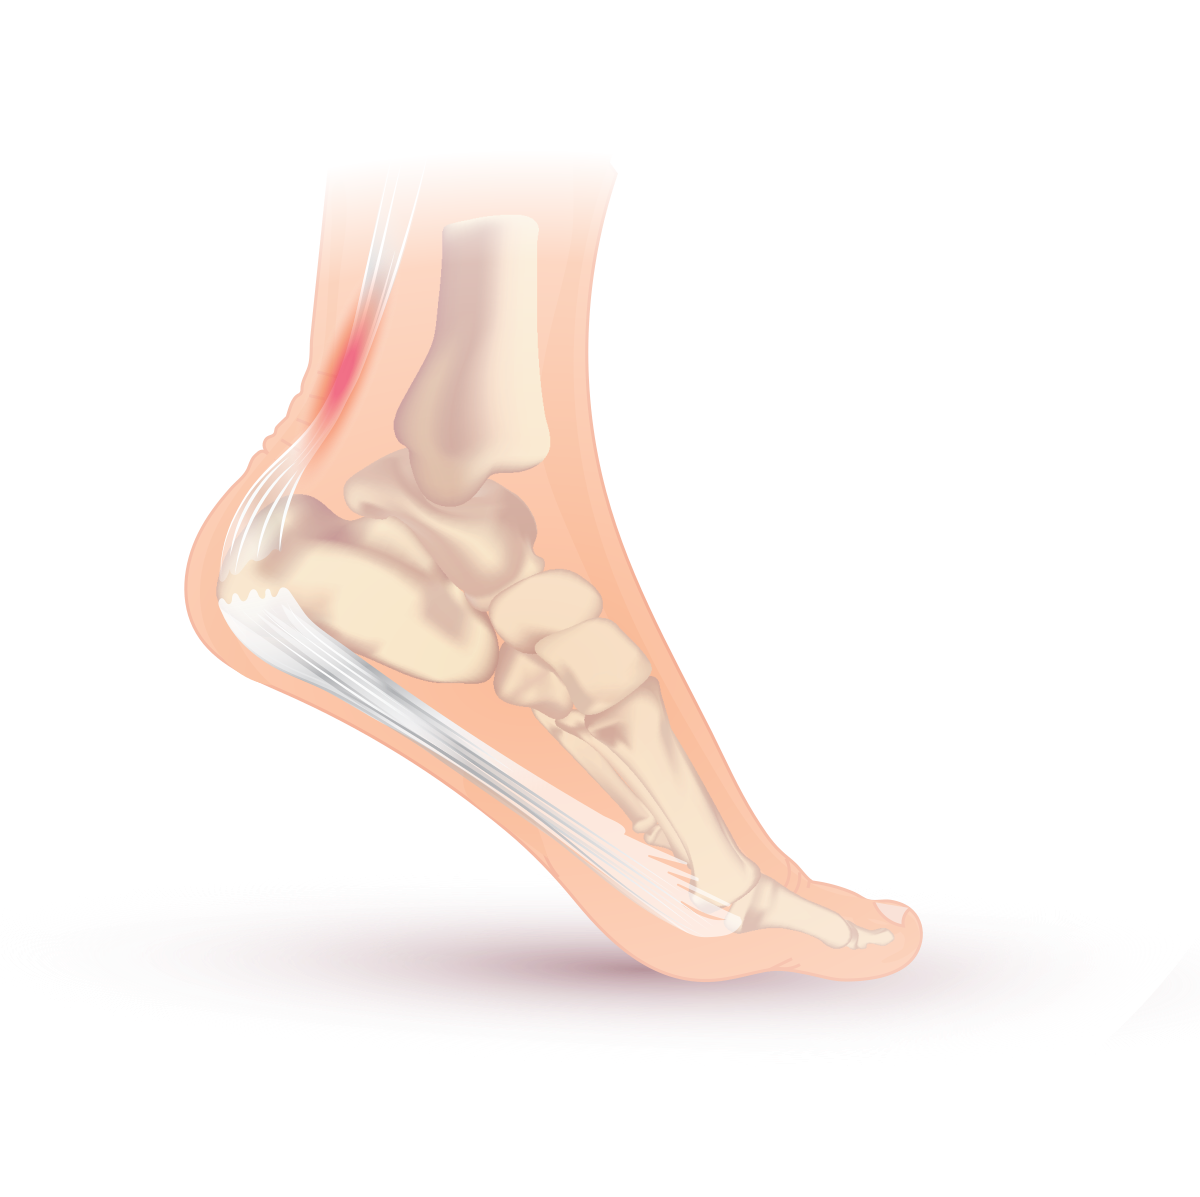 Achilles tendinitis - Wikipedia